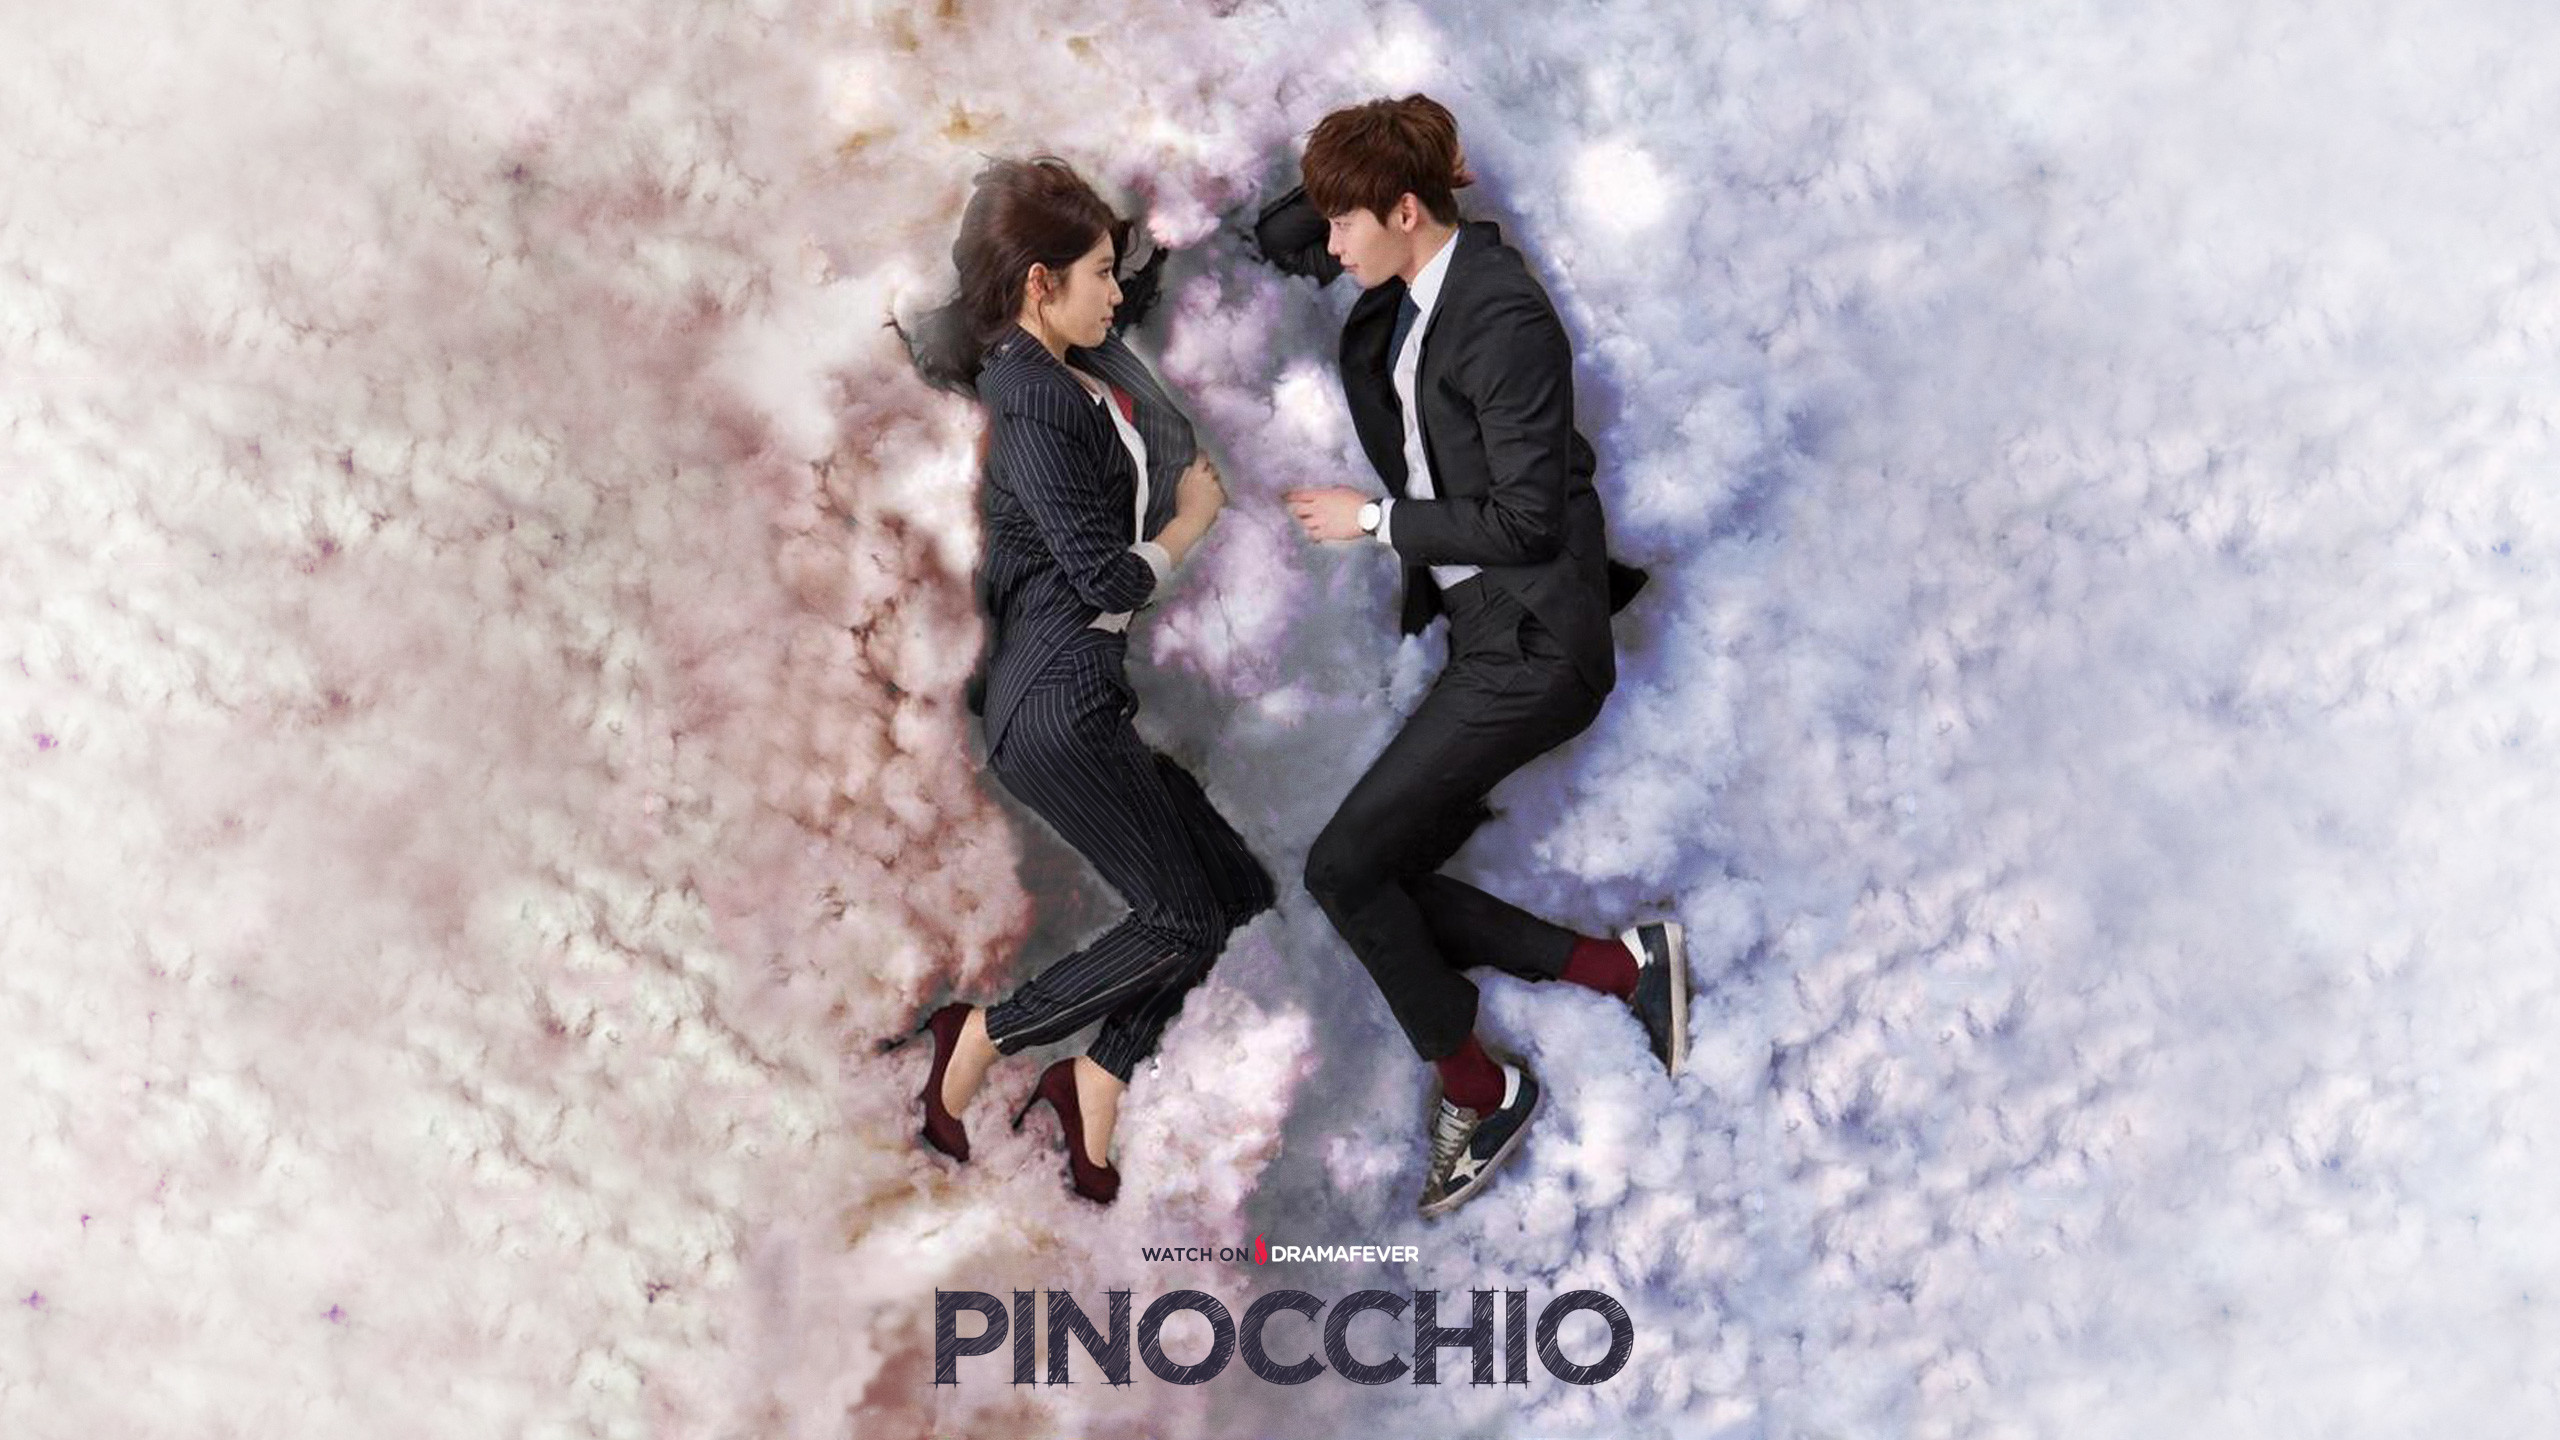 Download Pinocchio Wallpaper For Your Desktop, iPhone, Korea Pinocchio